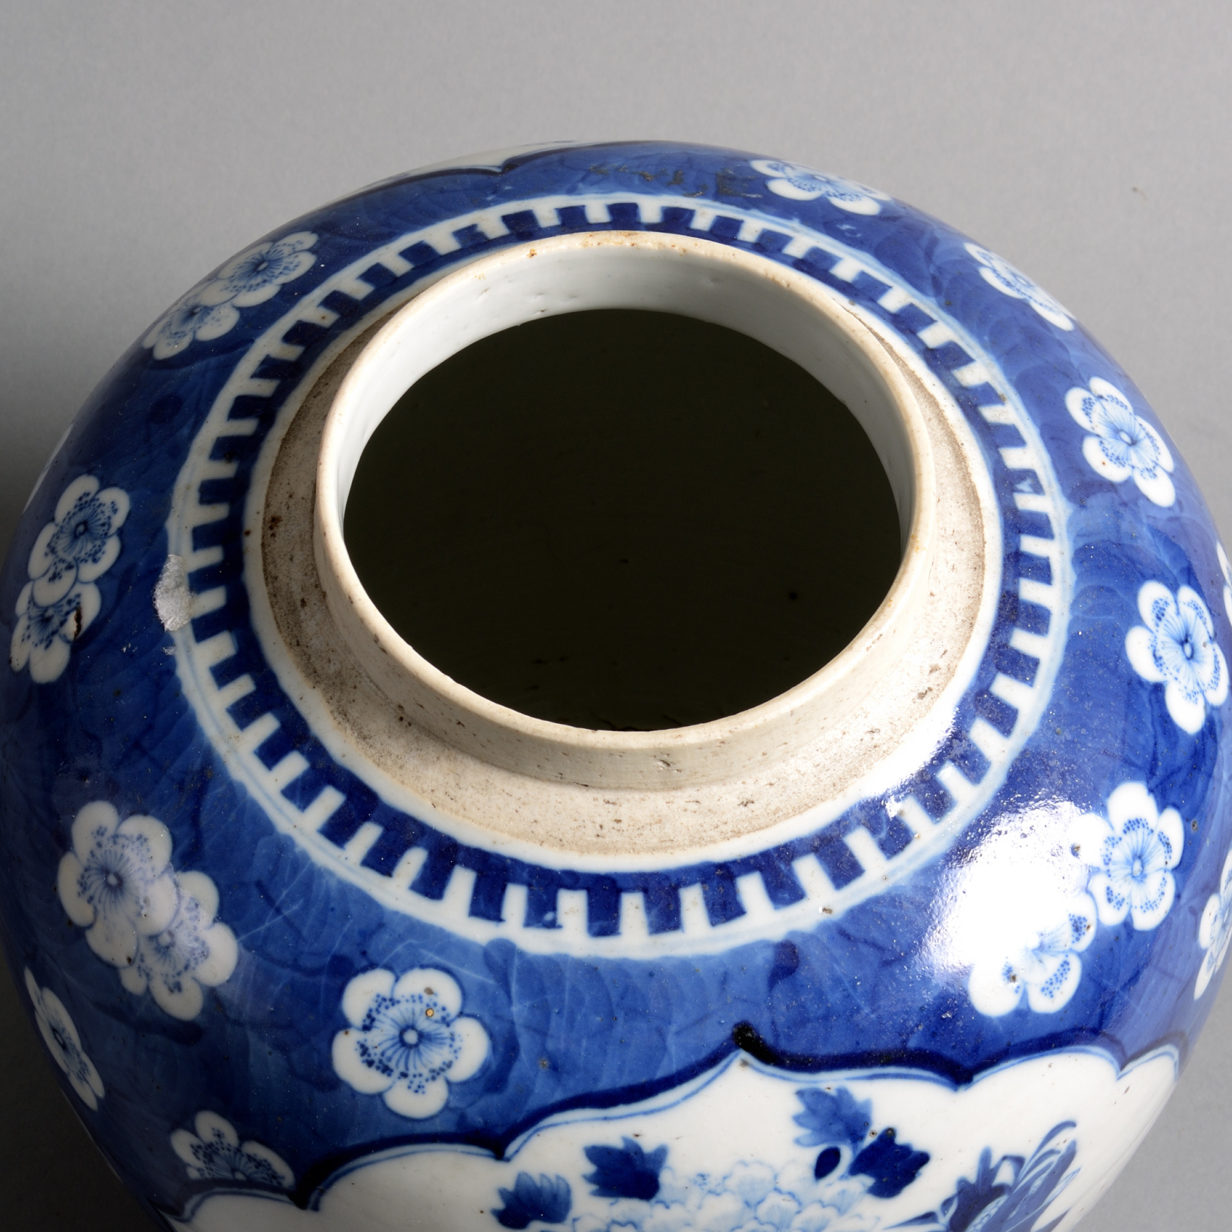 A 19th Century Qing Dynasty Blue & White Porcelain Jar